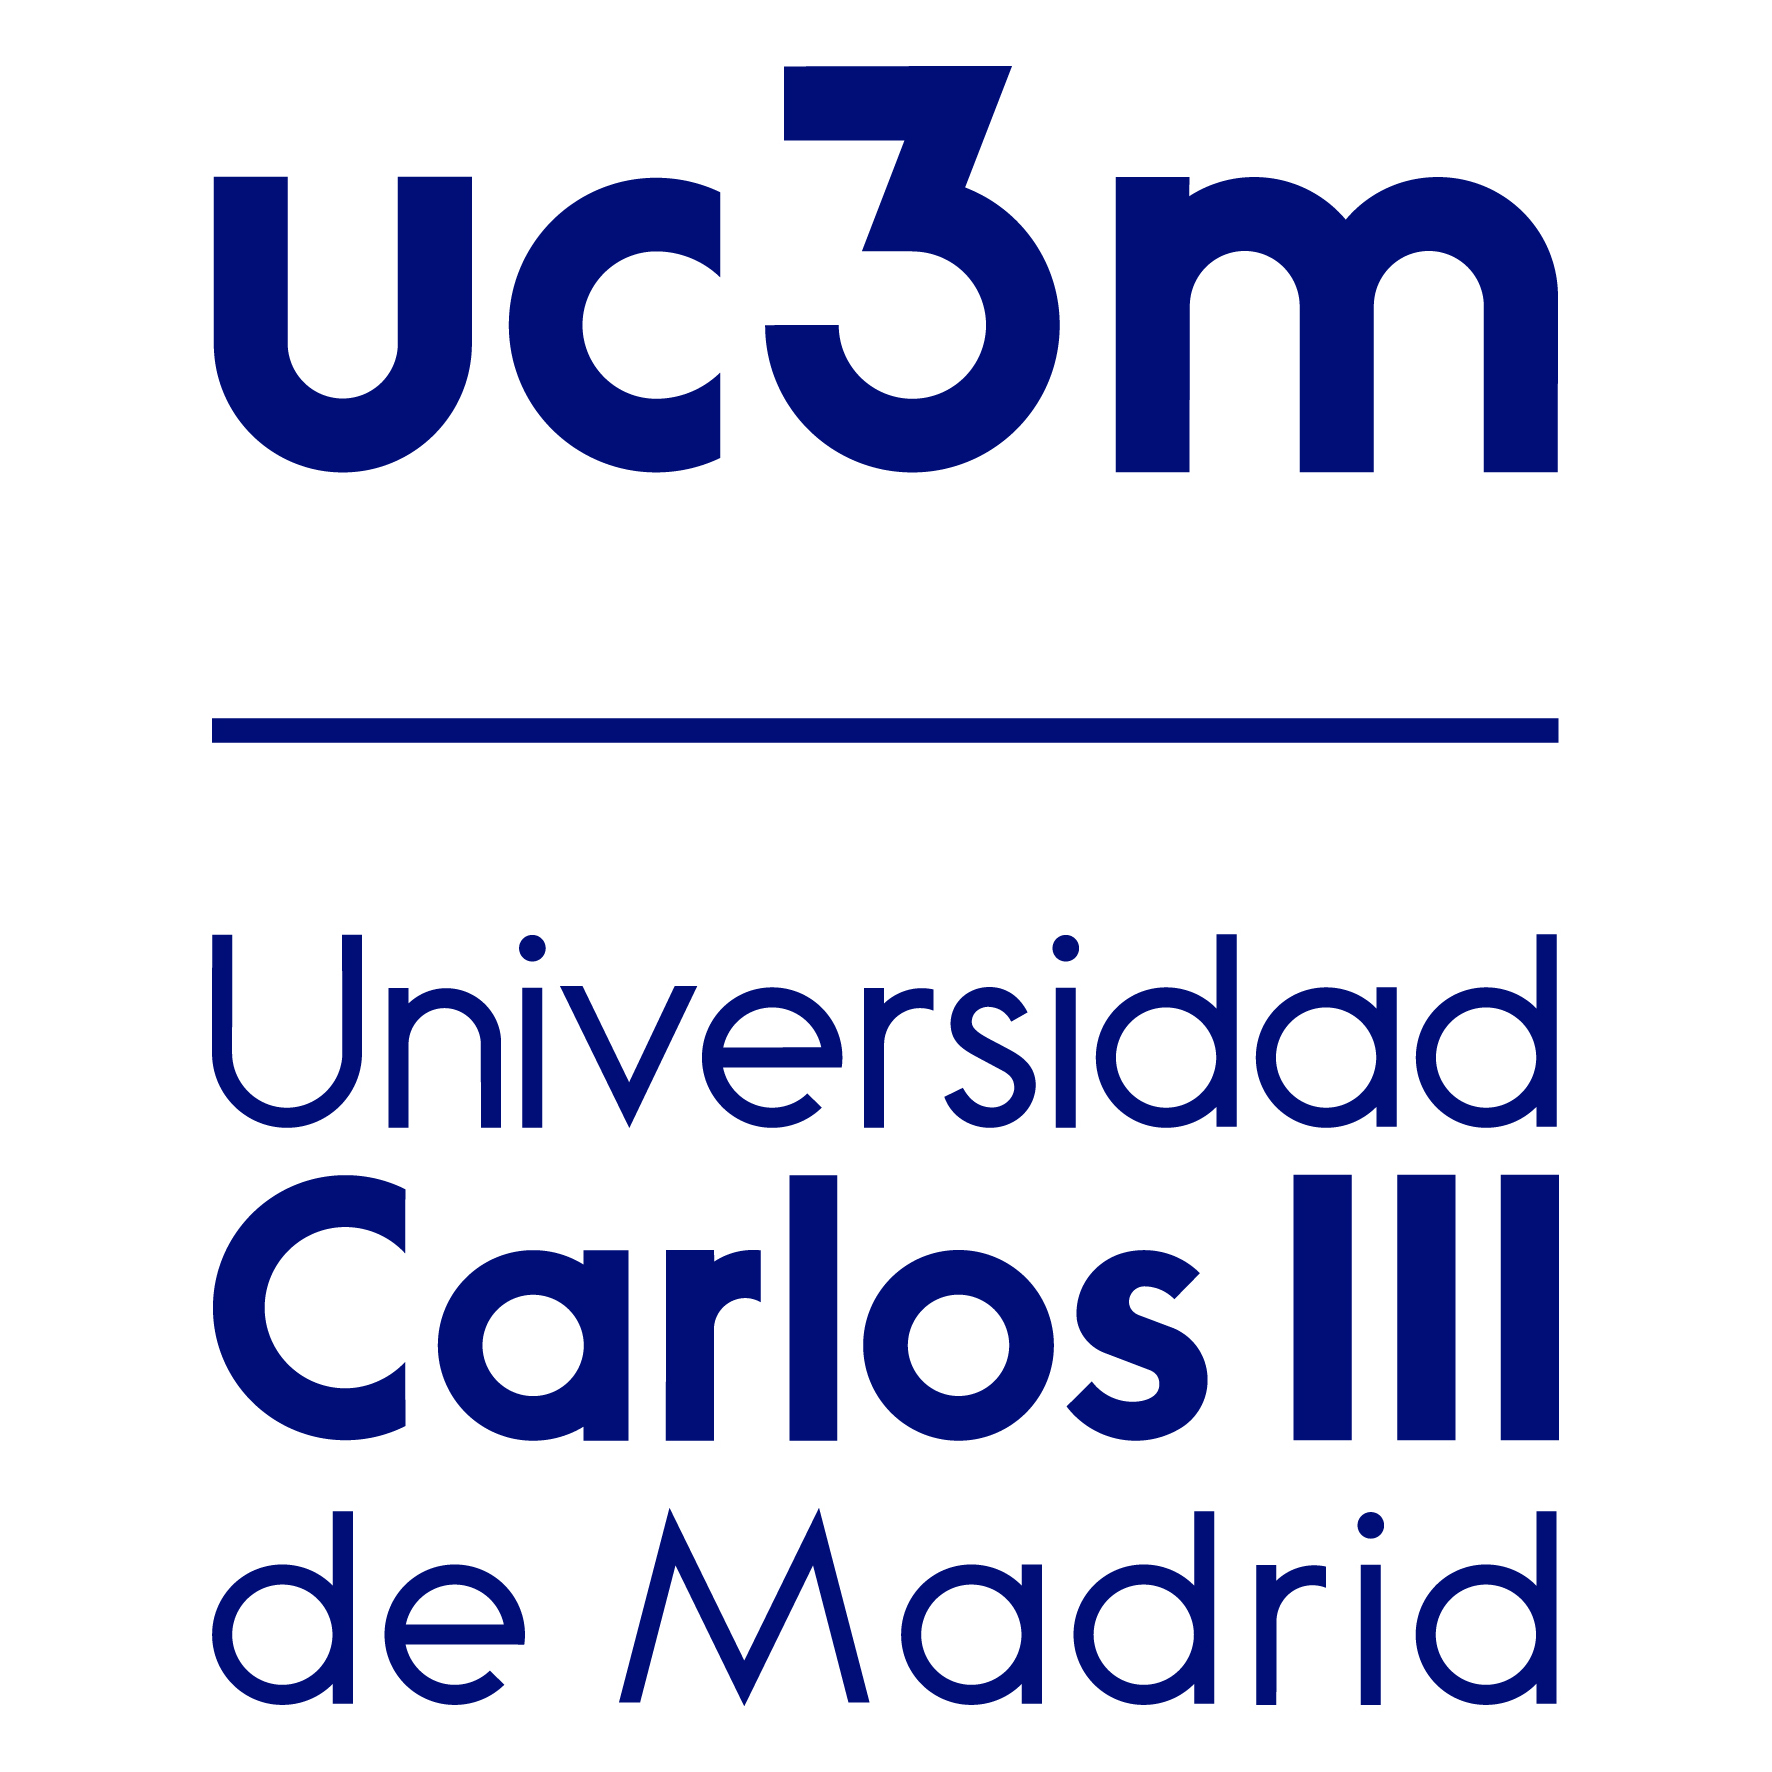 Study in Universidad Carlos III de Madrid - Charles III University of Madrid with Scholarship